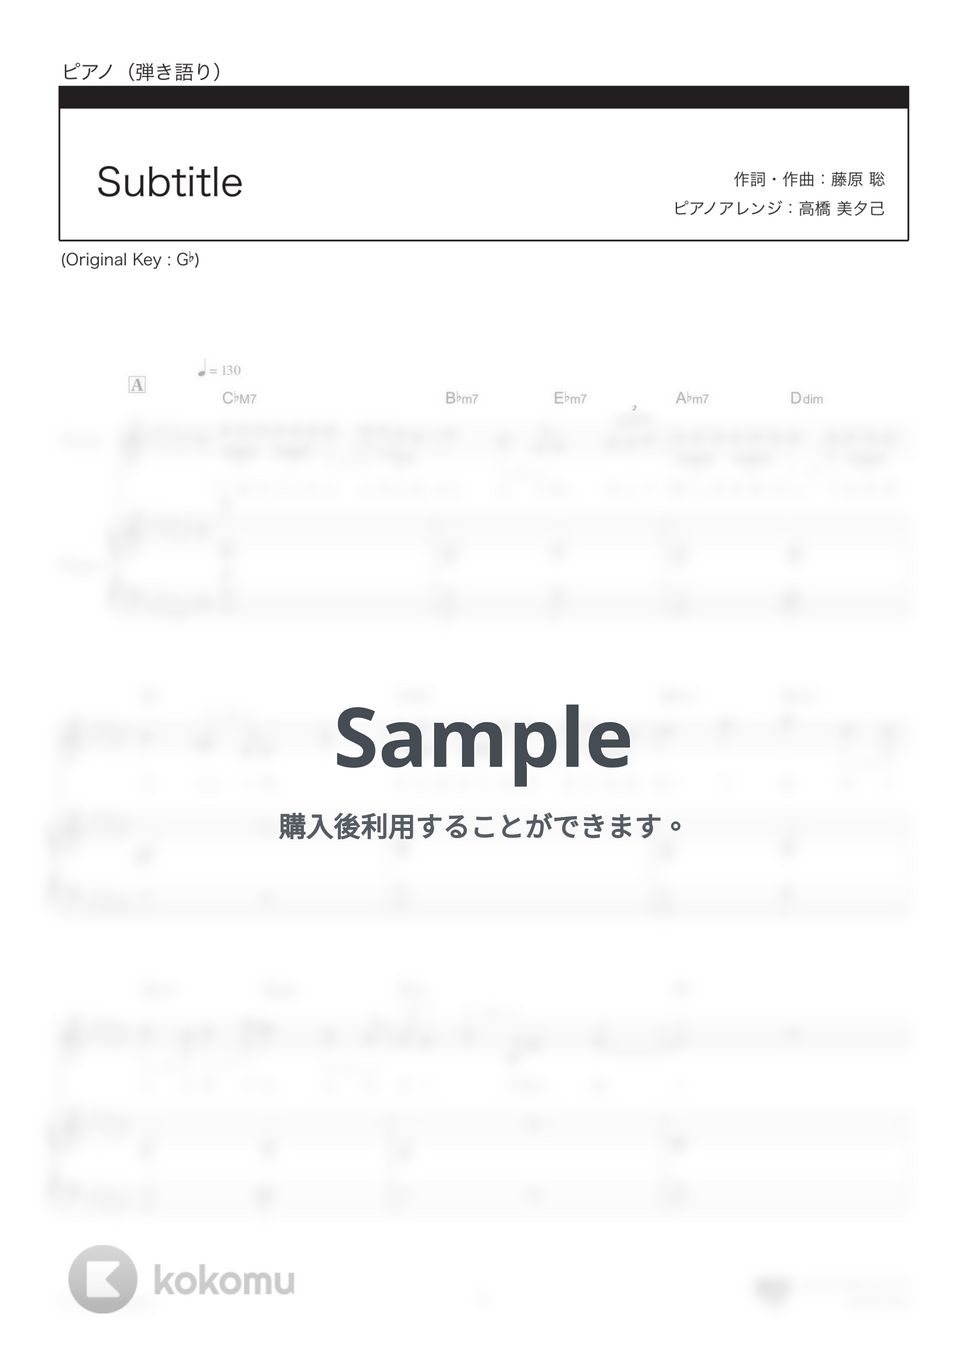 Official髭男dism - Subtitle (フジテレビドラマ『Silent』主題歌) by 楽譜仕事人_高橋美夕己